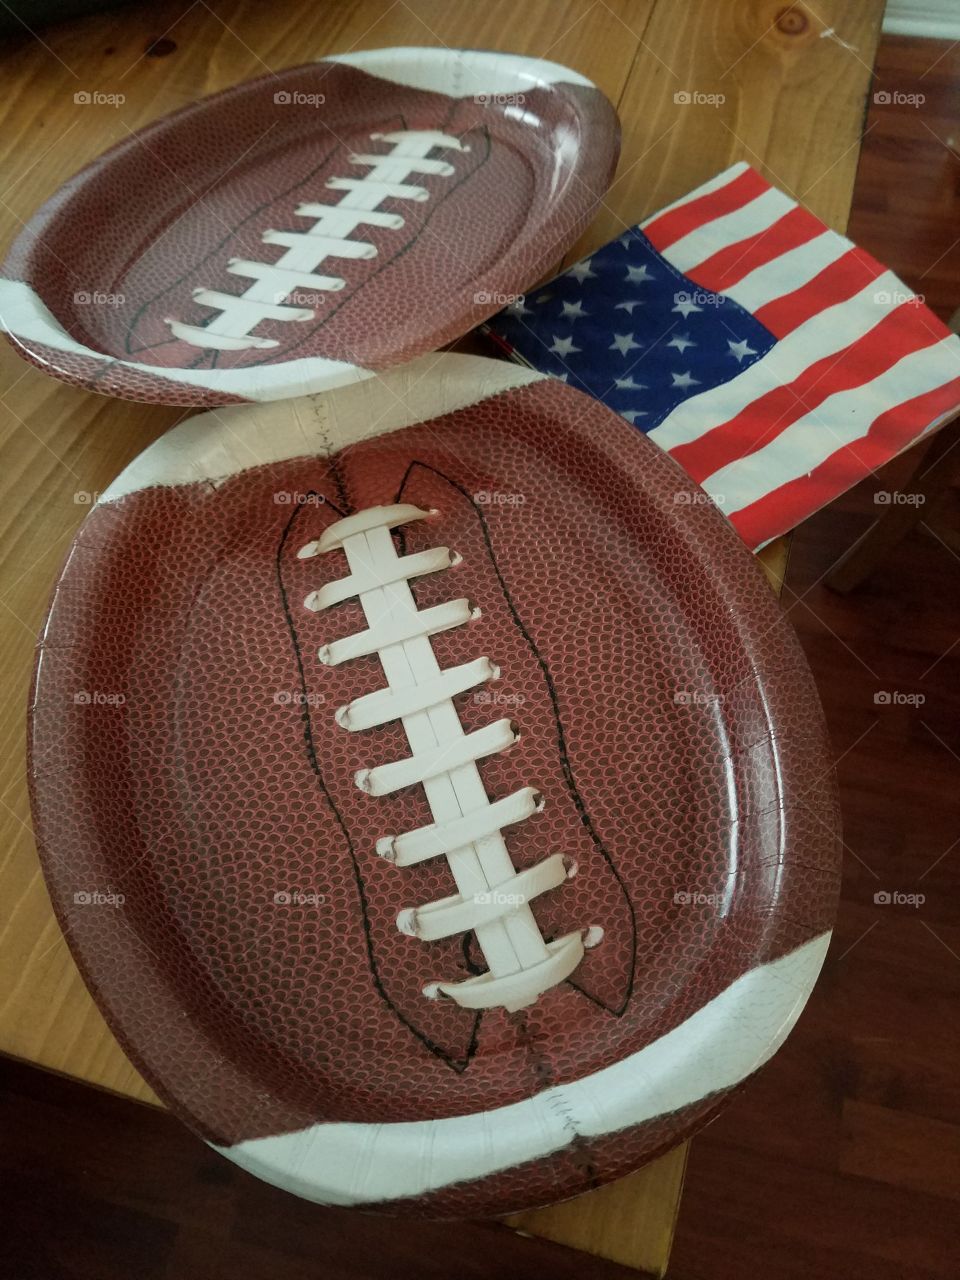 Super Bowl preparations paper football plates